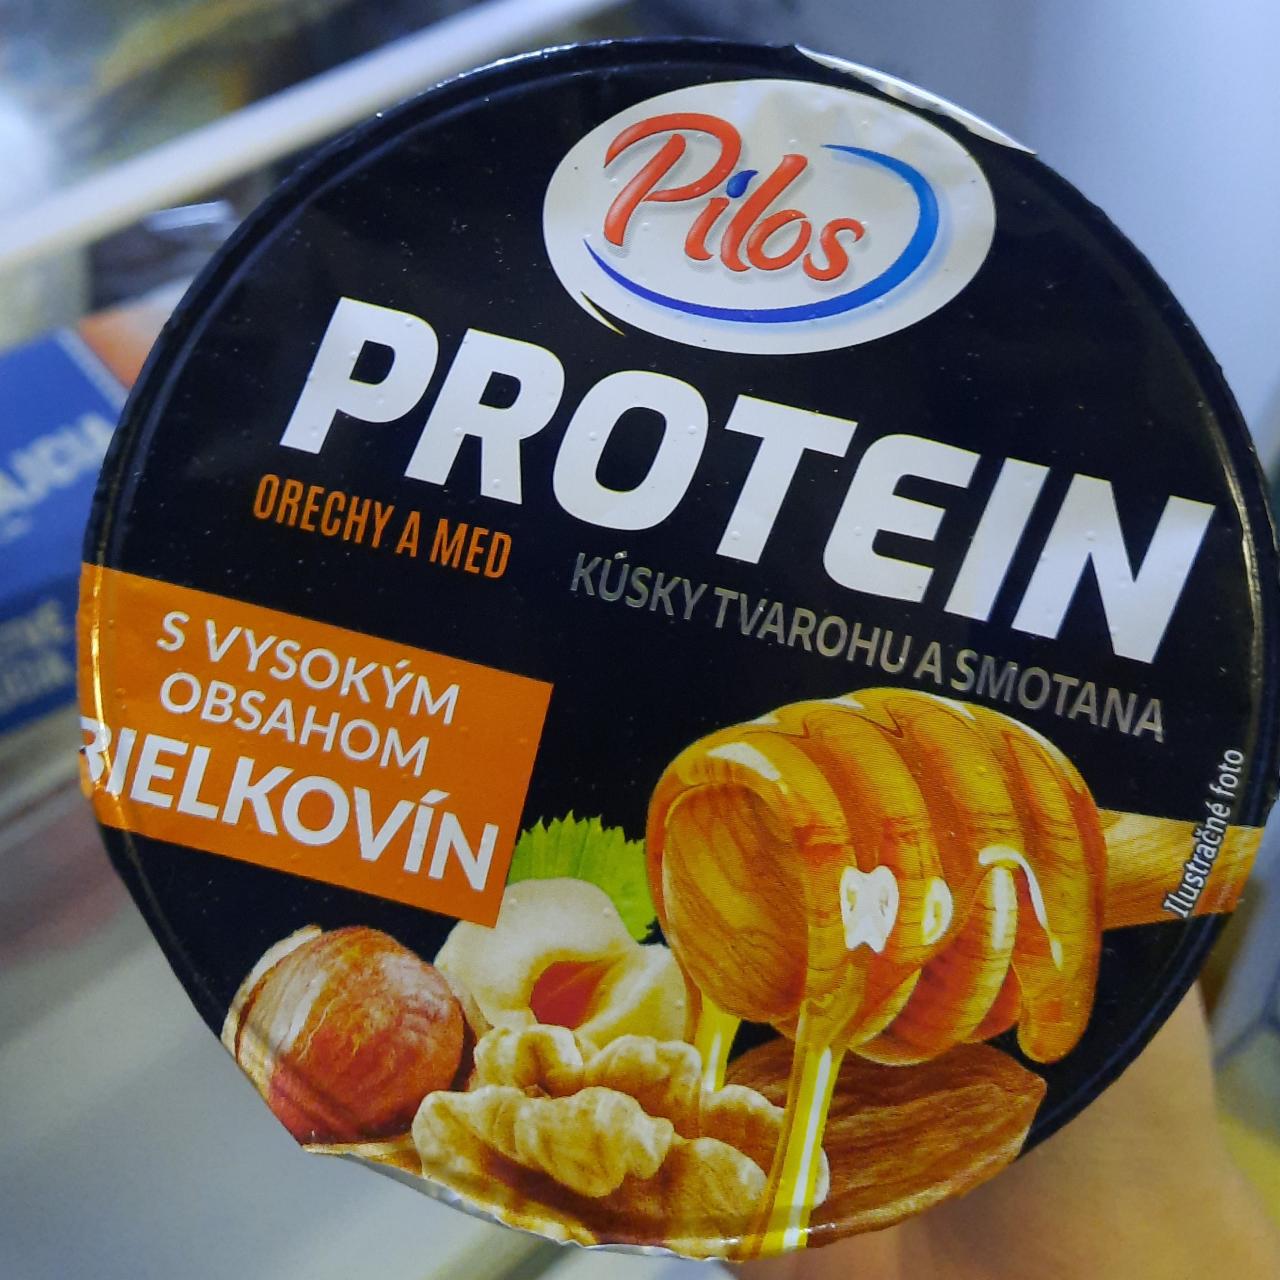 Фото - Protein ořechy a med kousky tvarohu a smetana Pilos